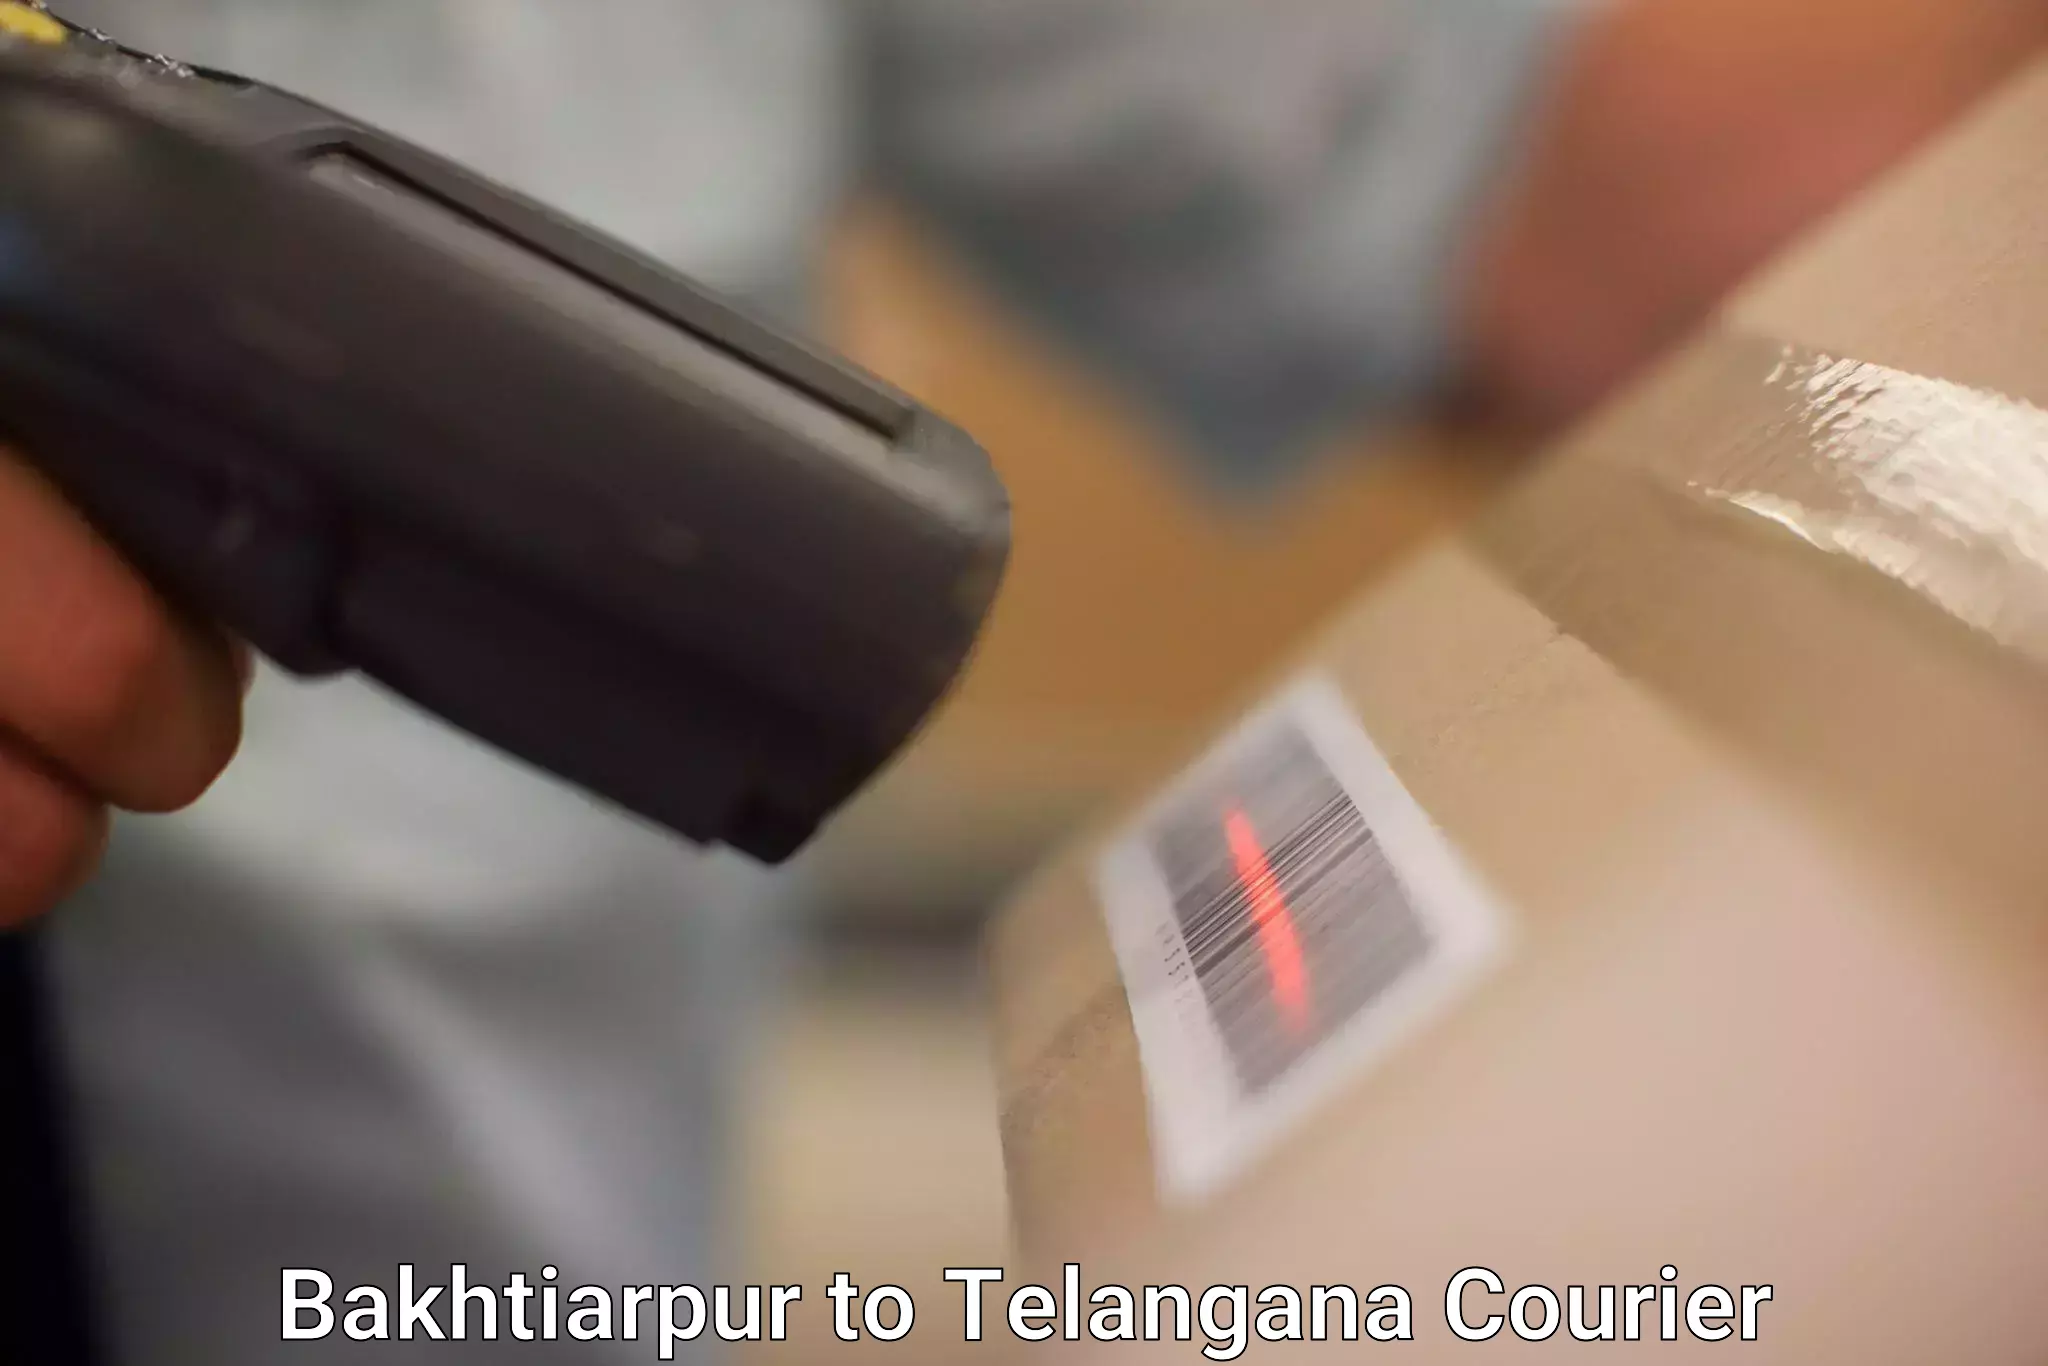 Courier service partnerships Bakhtiarpur to Telangana